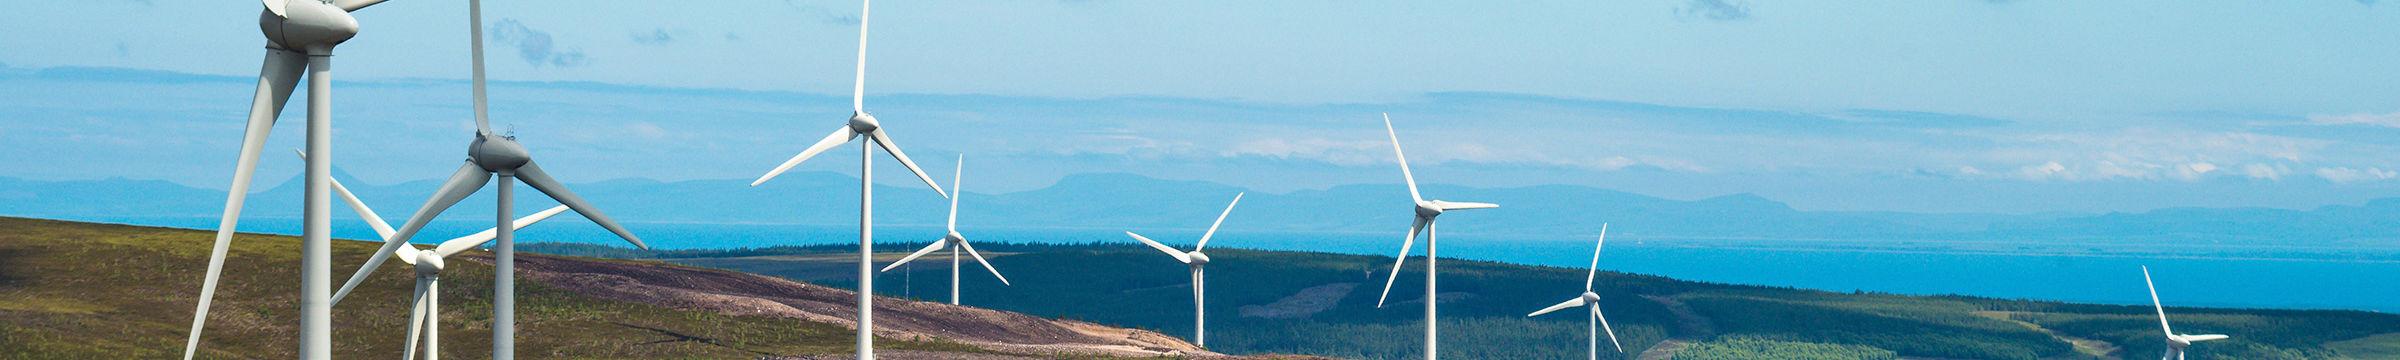 Wind farm in hilly landscape